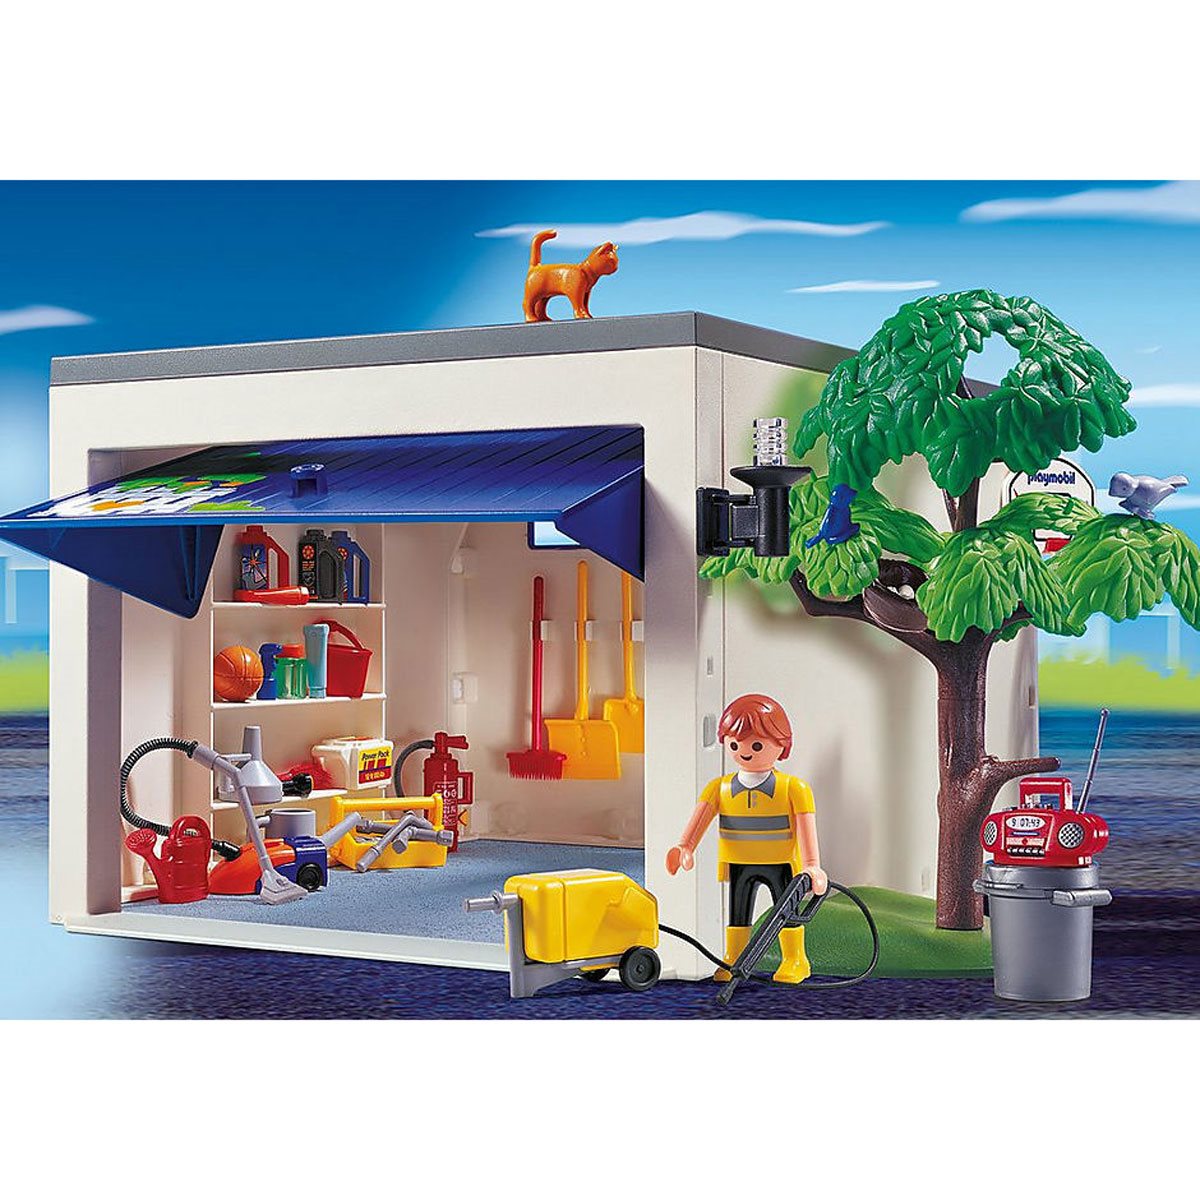 Playmobil City Life set # 4318 (2006) Garage review 